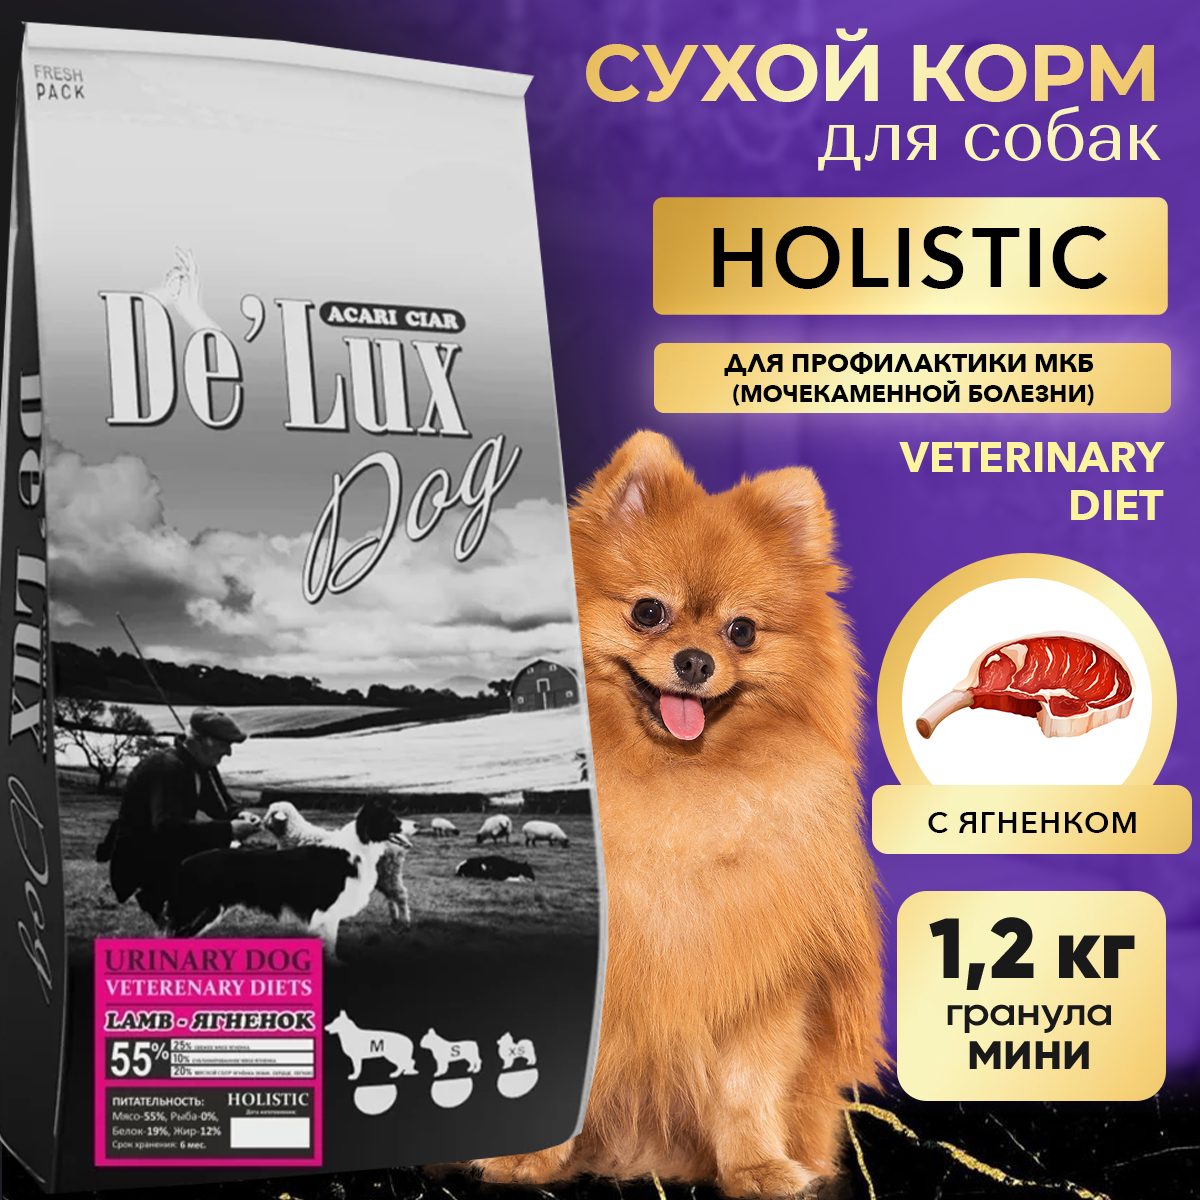 Корм сухой Acari Ciar De'Lux VET A DOG URINARY LAMB HOLISTIC 1.2 кг (гранула Мини - S) для собак Холистик